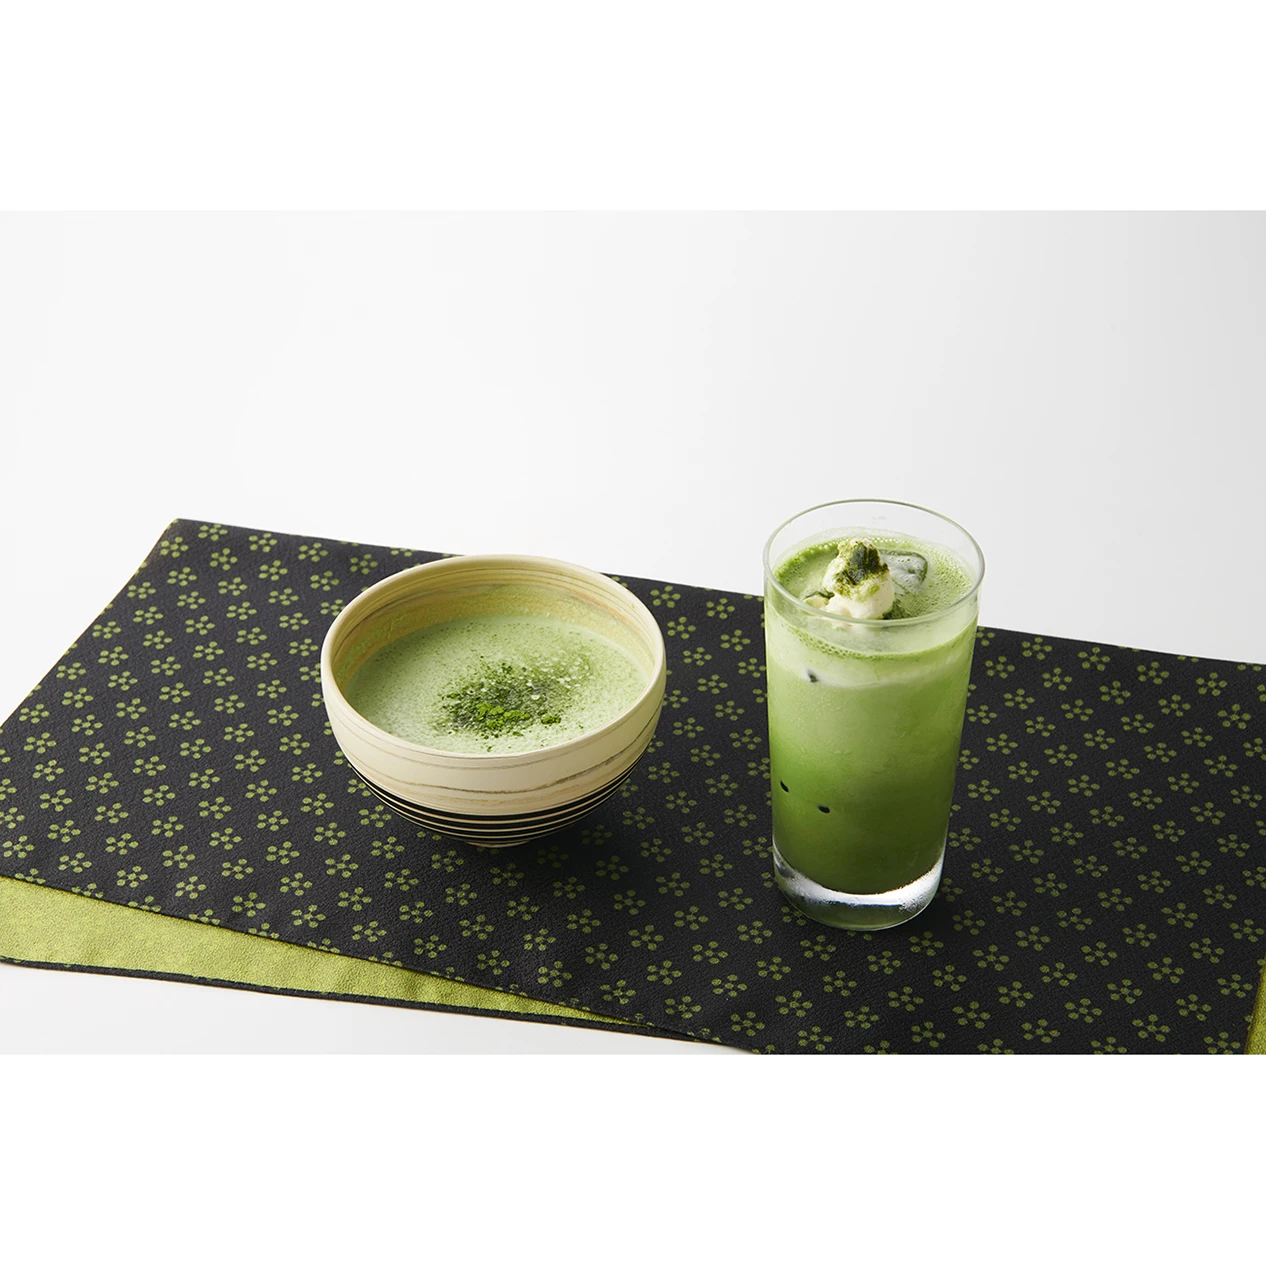 Regular premium powder (culinary grade) Japan green matcha tea